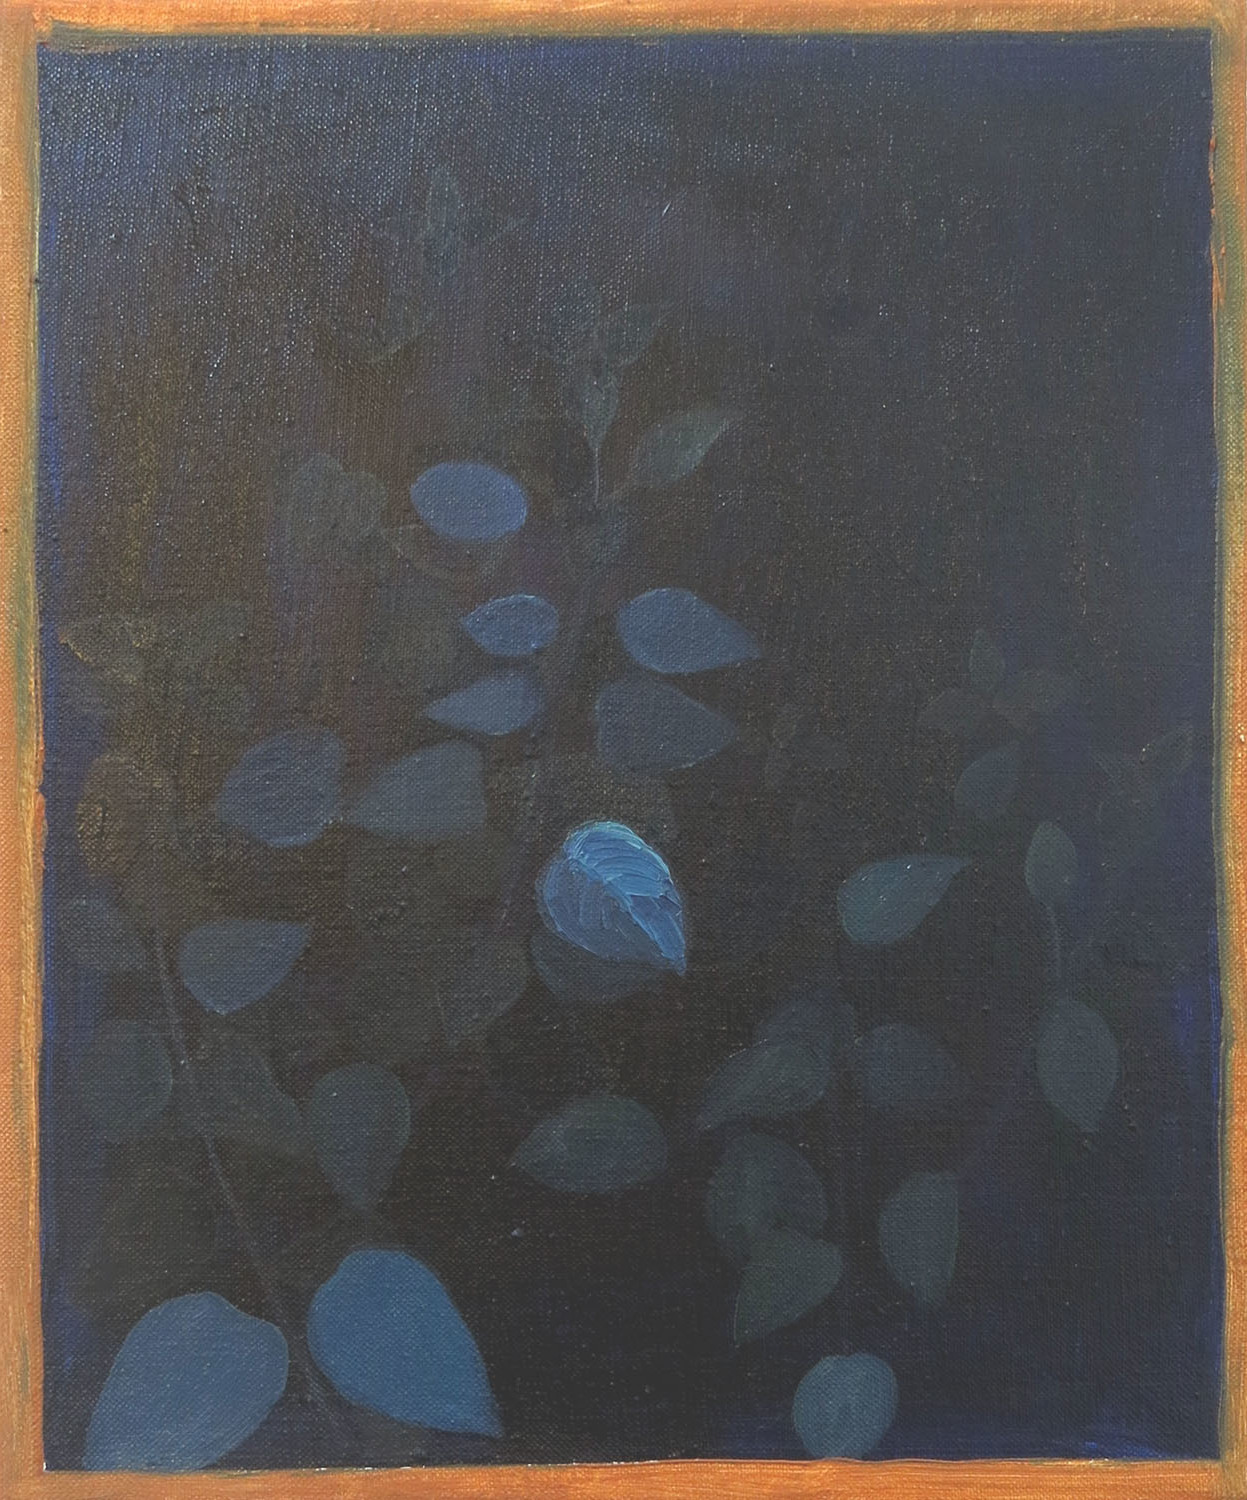   Window plant    2018, oil on canvas, 30 x 25cm  